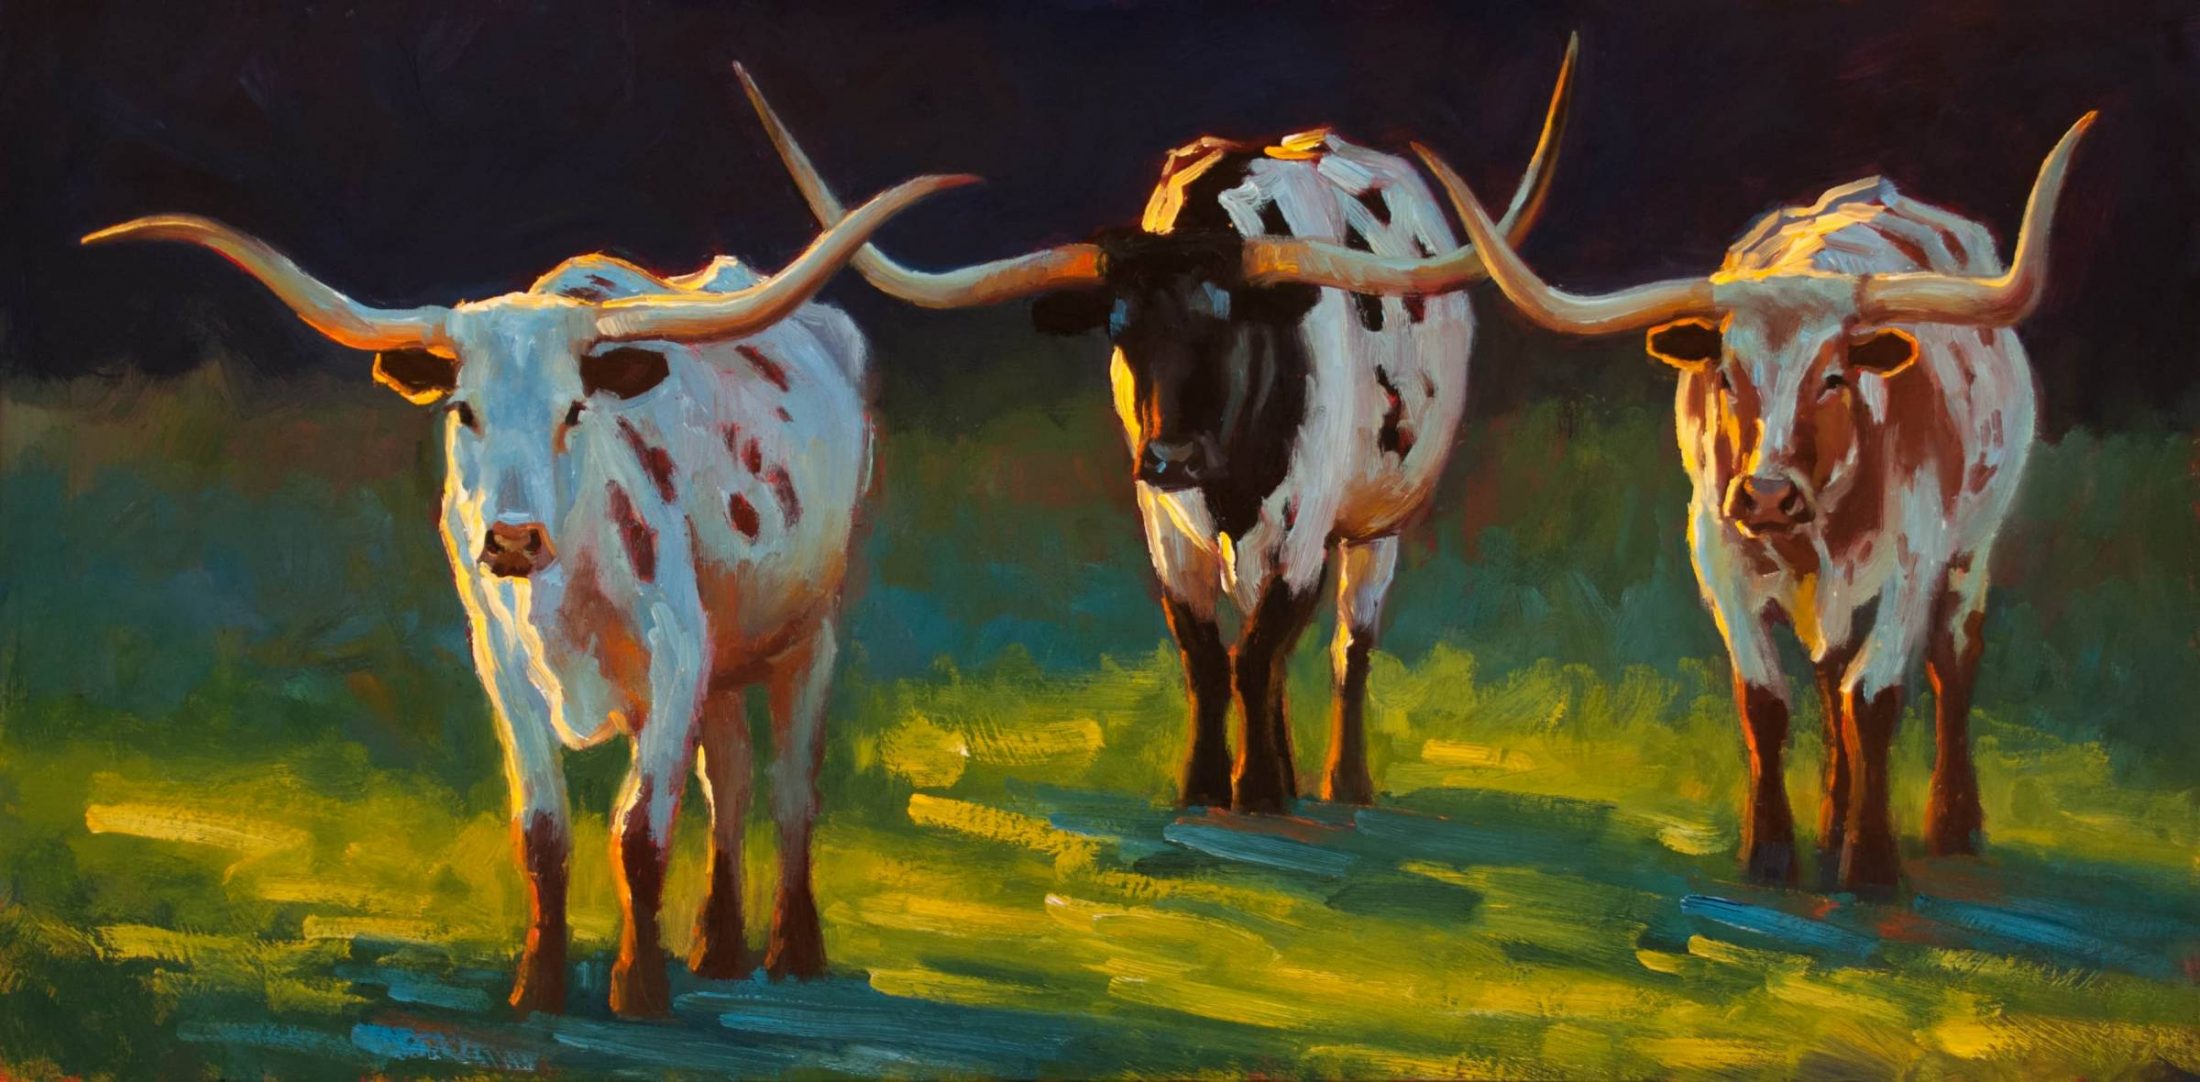 Crossed Paths painting of three longhorns by Cheri Christensen